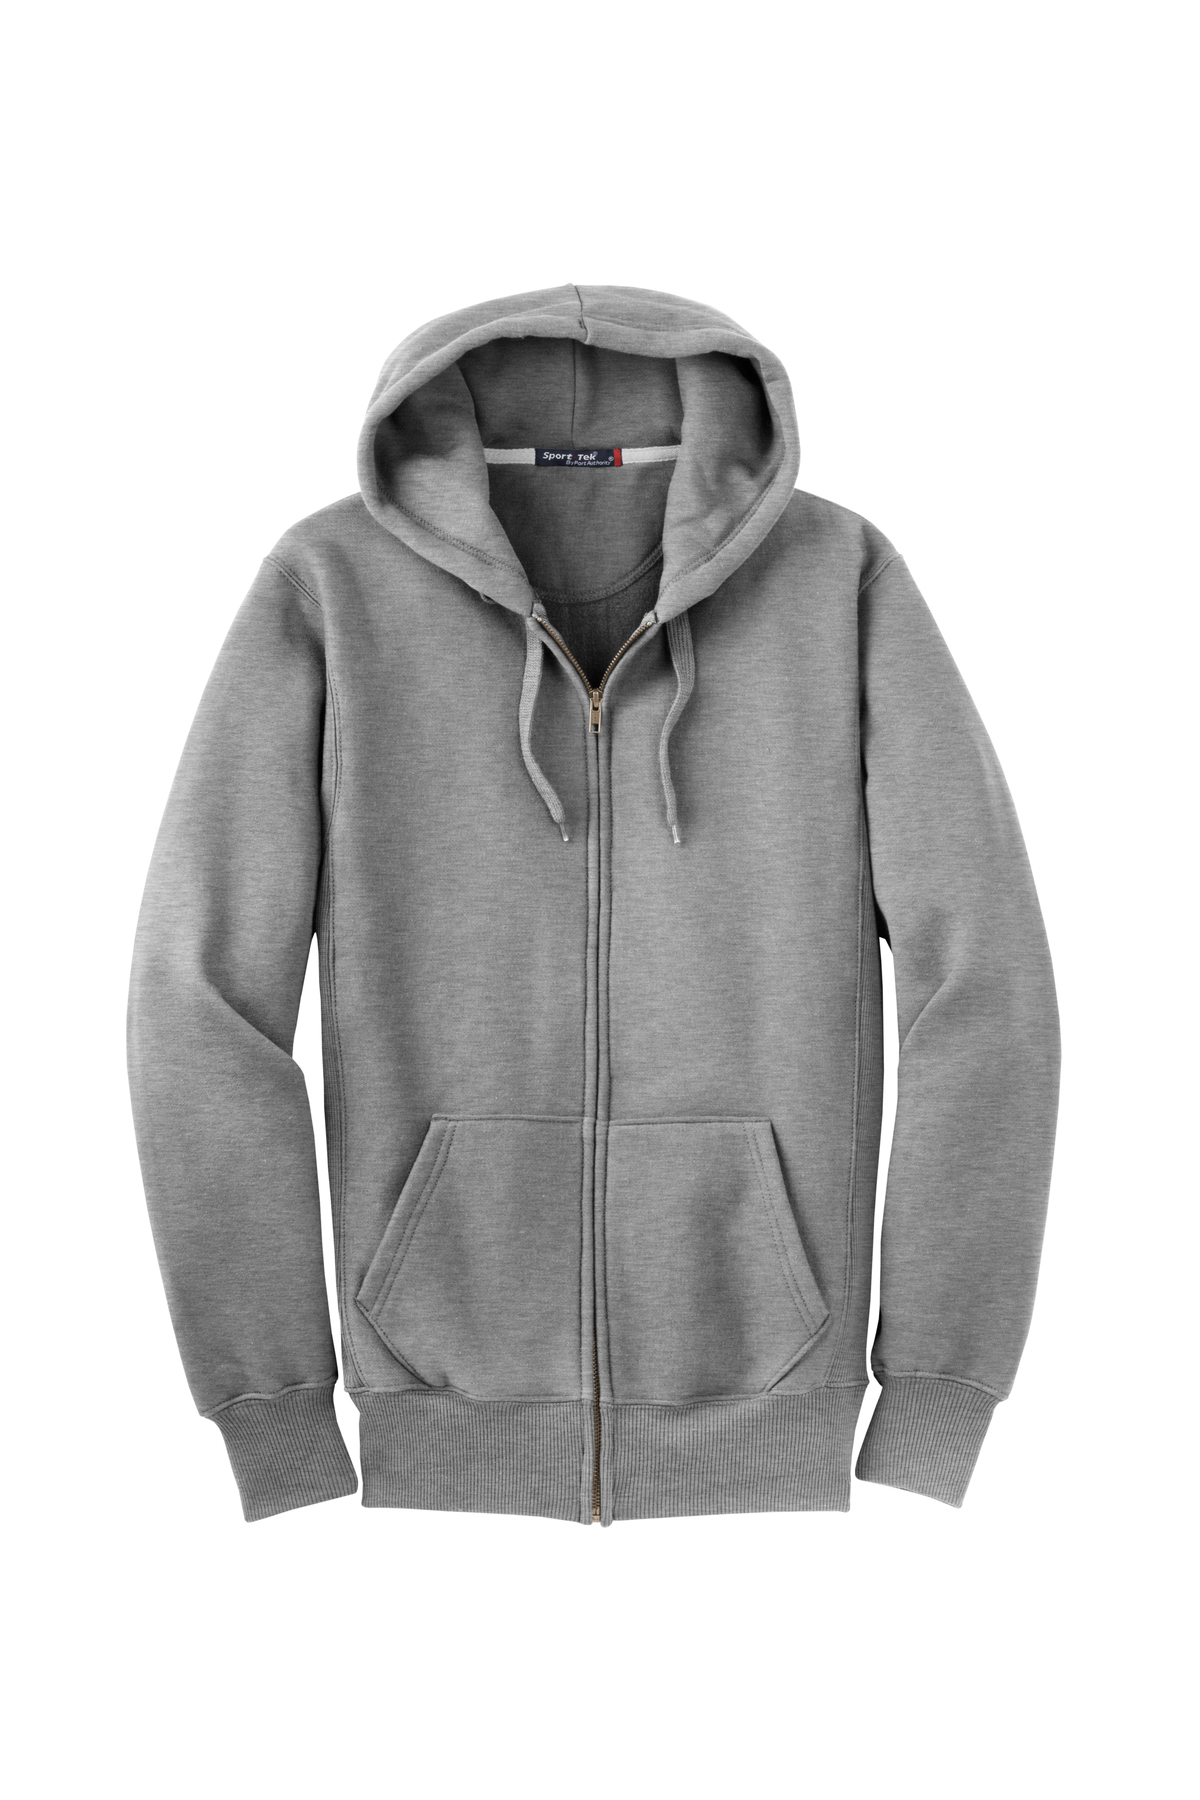 Marky G Apparel Mens Flex Fleece Full-Zip Hooded Sweatshirt 3 Packs Dark Heather Gr Jacket 3 Pack 2XL 